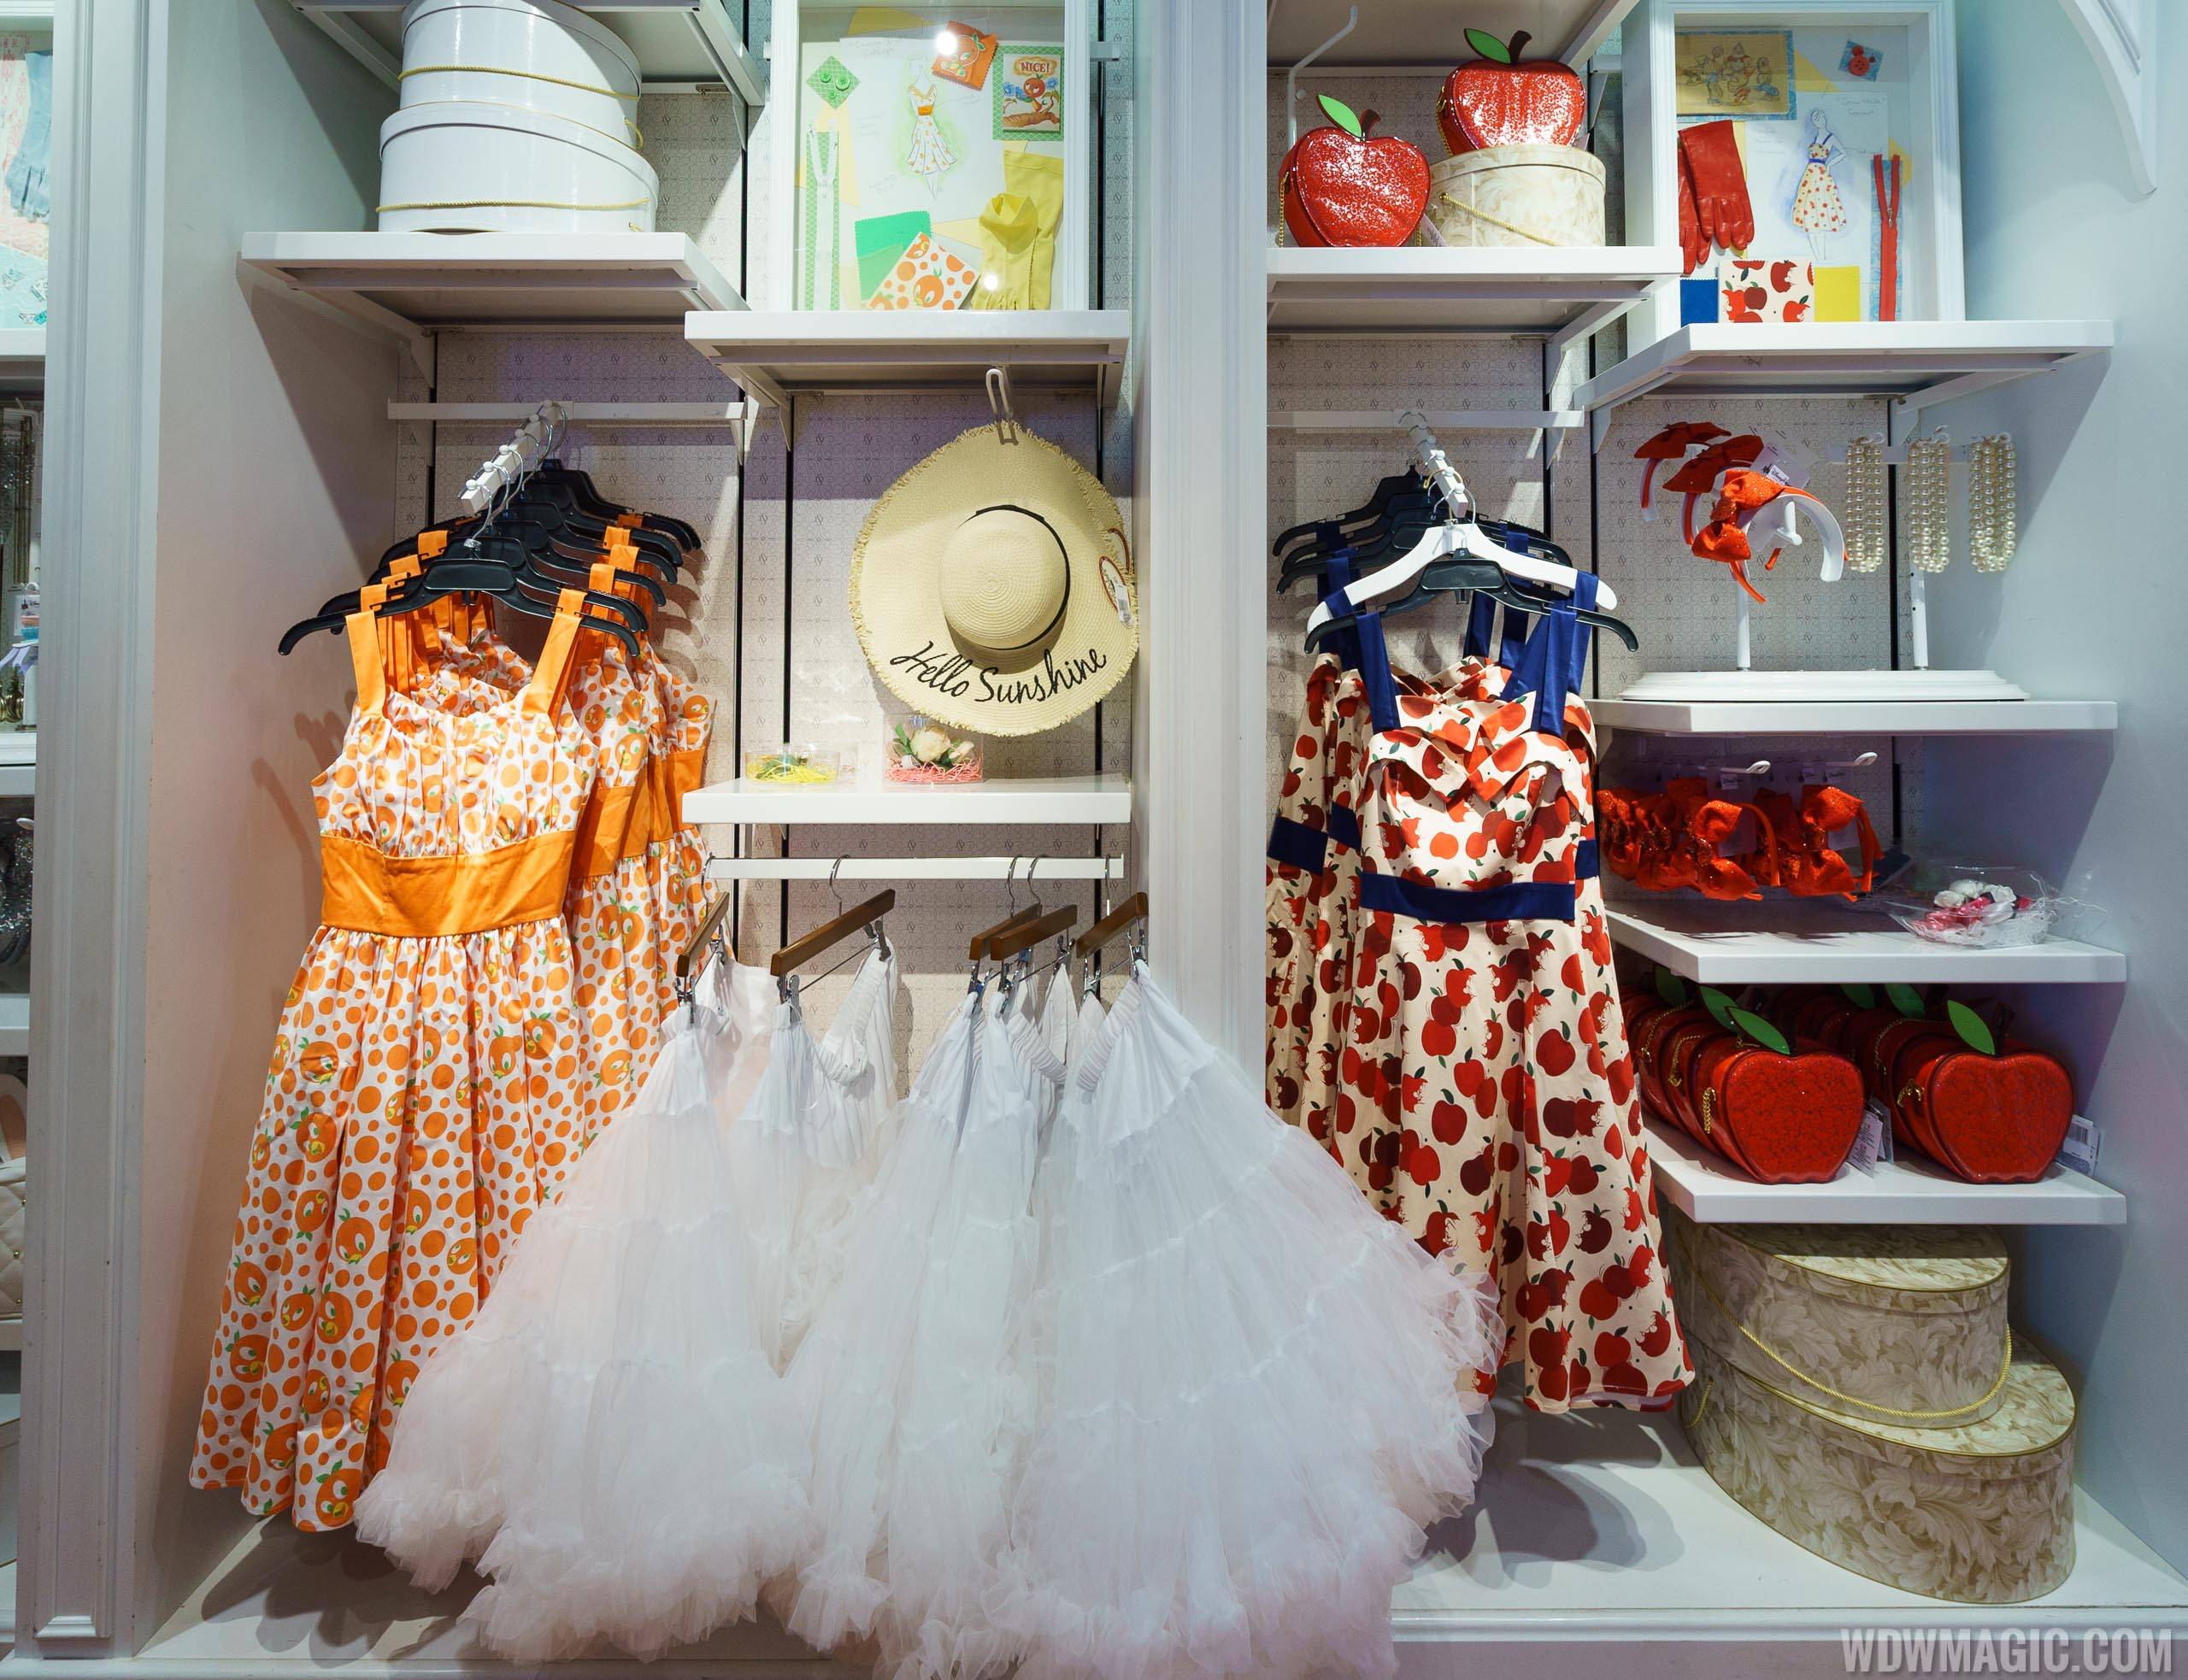 The Dress Shop on Cherry Tree Lane - Orange Bird and Snow White dress